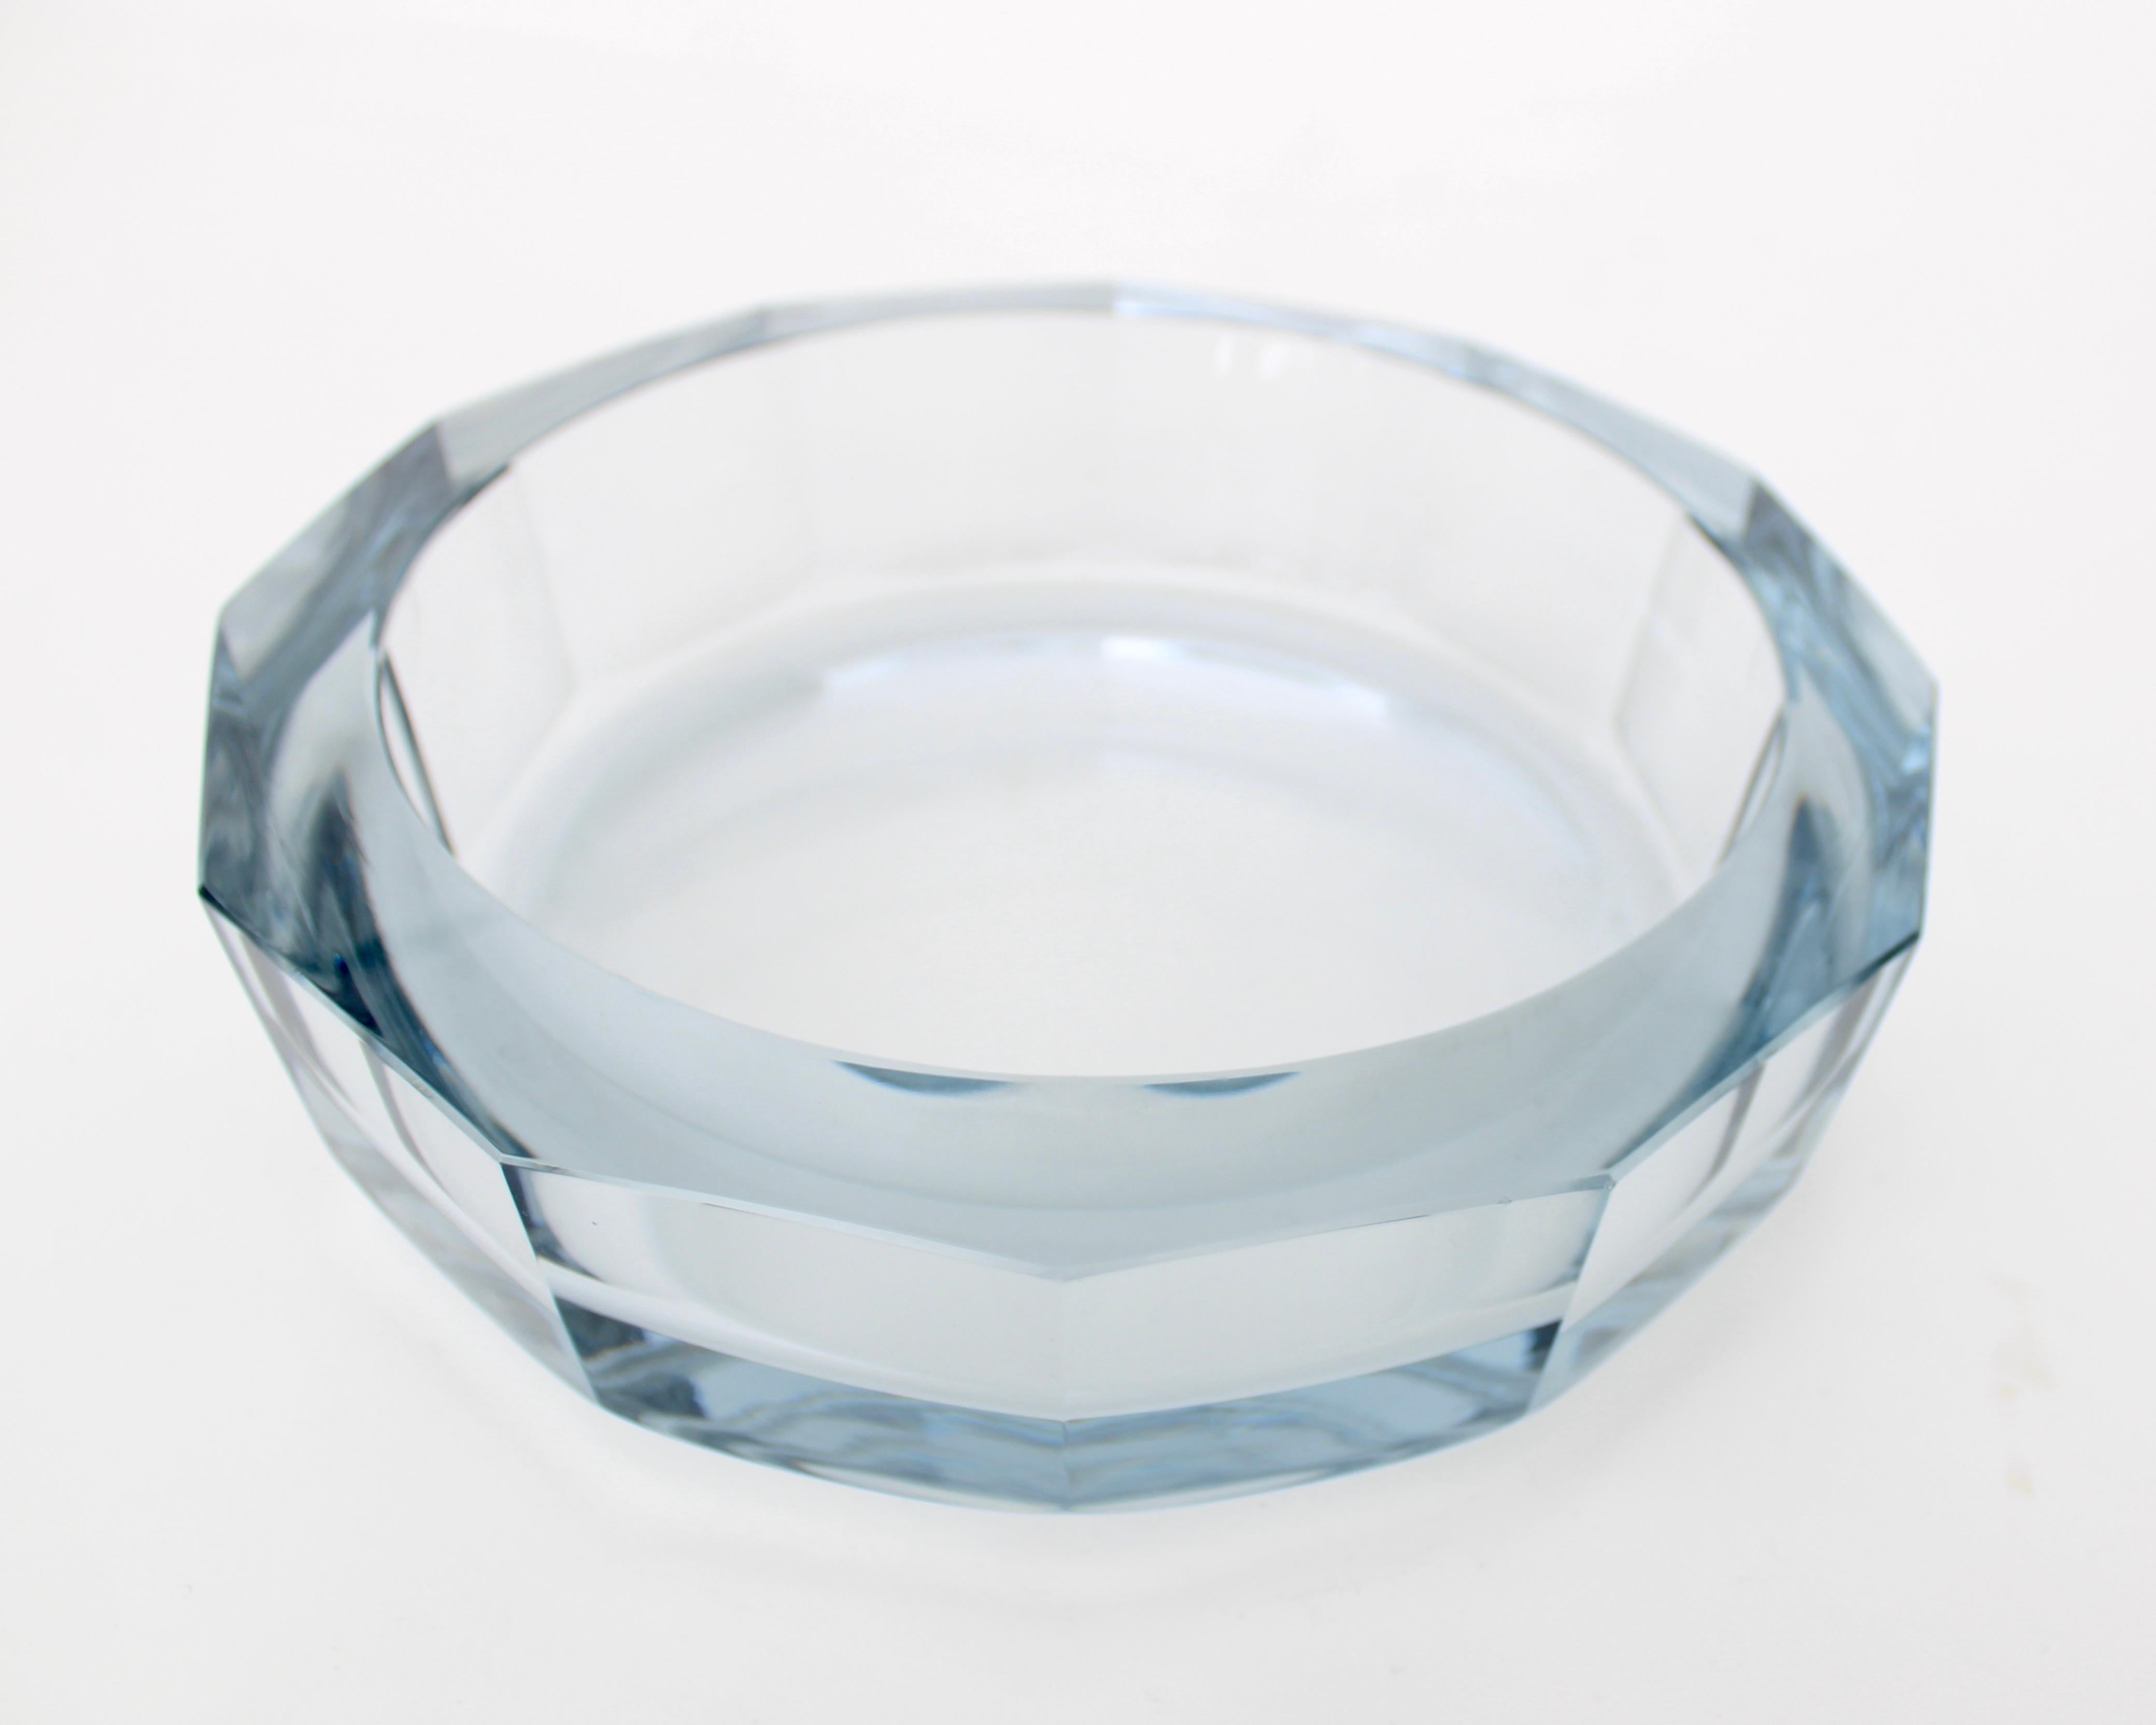 Mid-20th Century Diamond Cut Glass Dish by Strömberg Sweden Designed by Aste Stromberg circa 1950